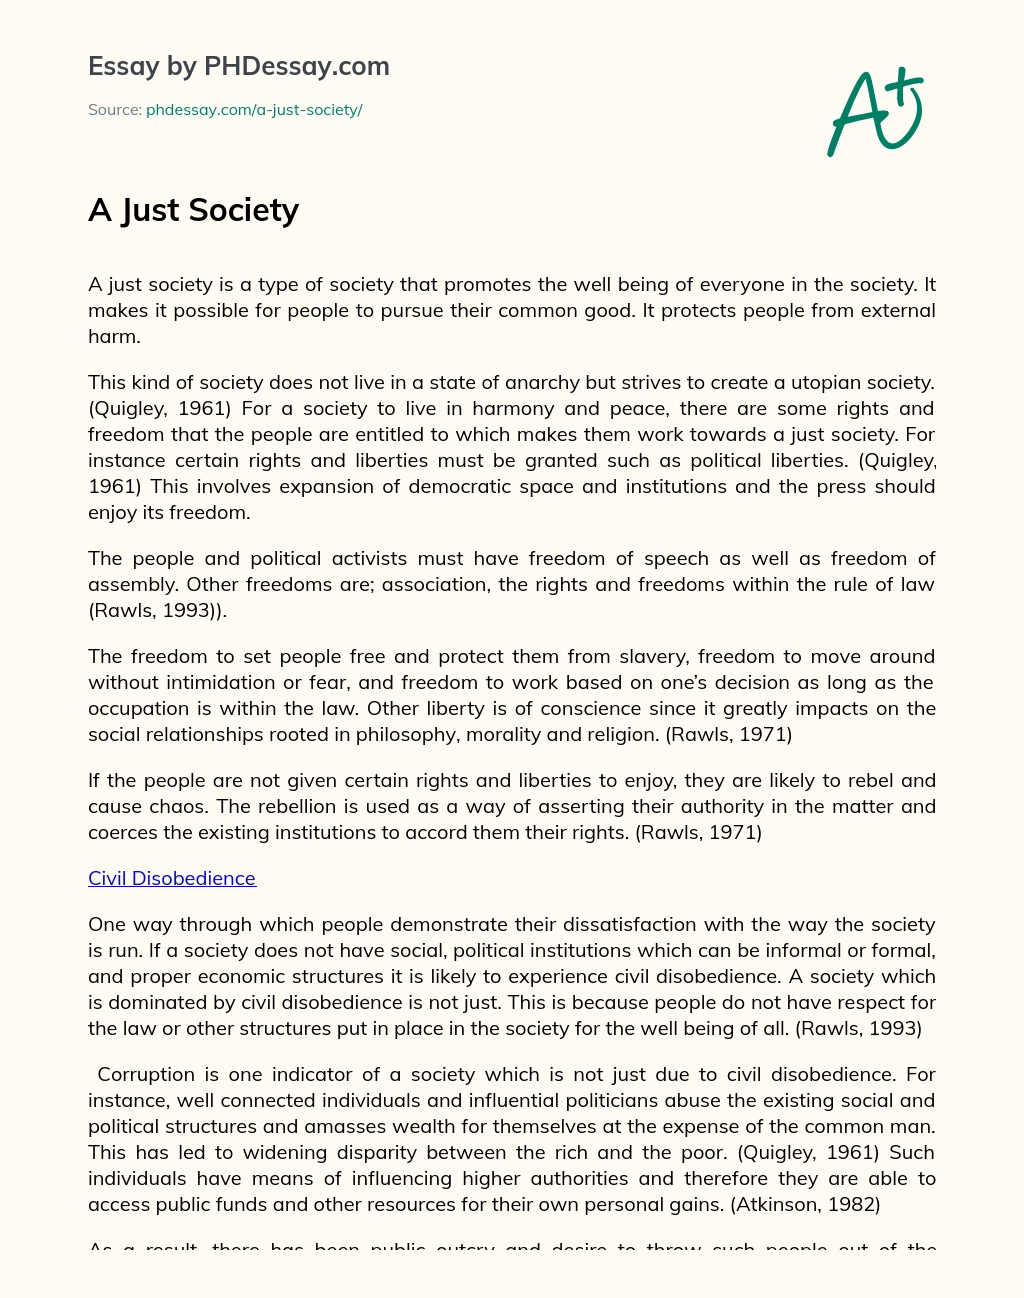 A Just Society essay